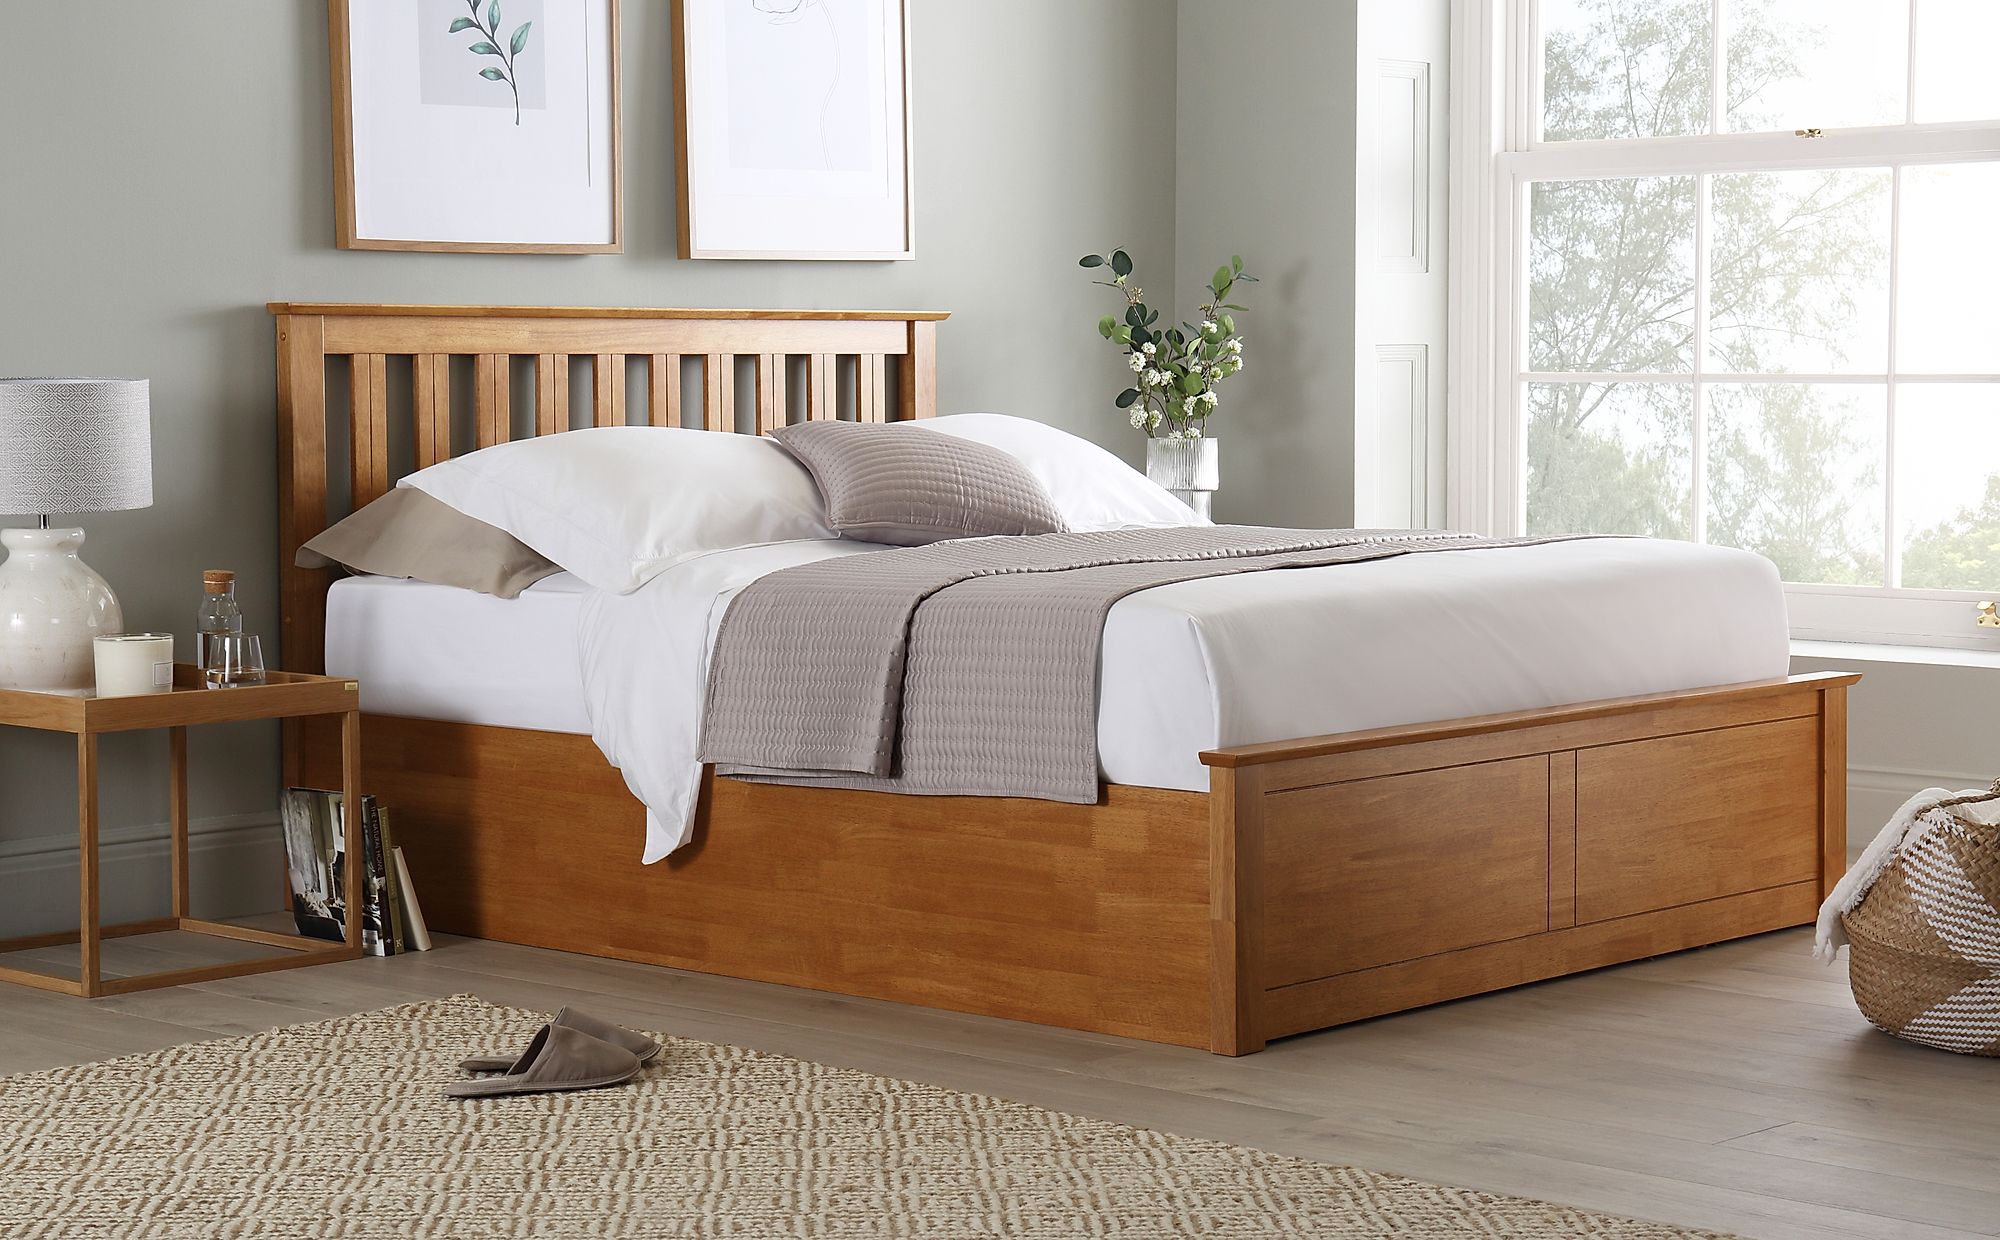 king size ottoman beds with memory foam mattress